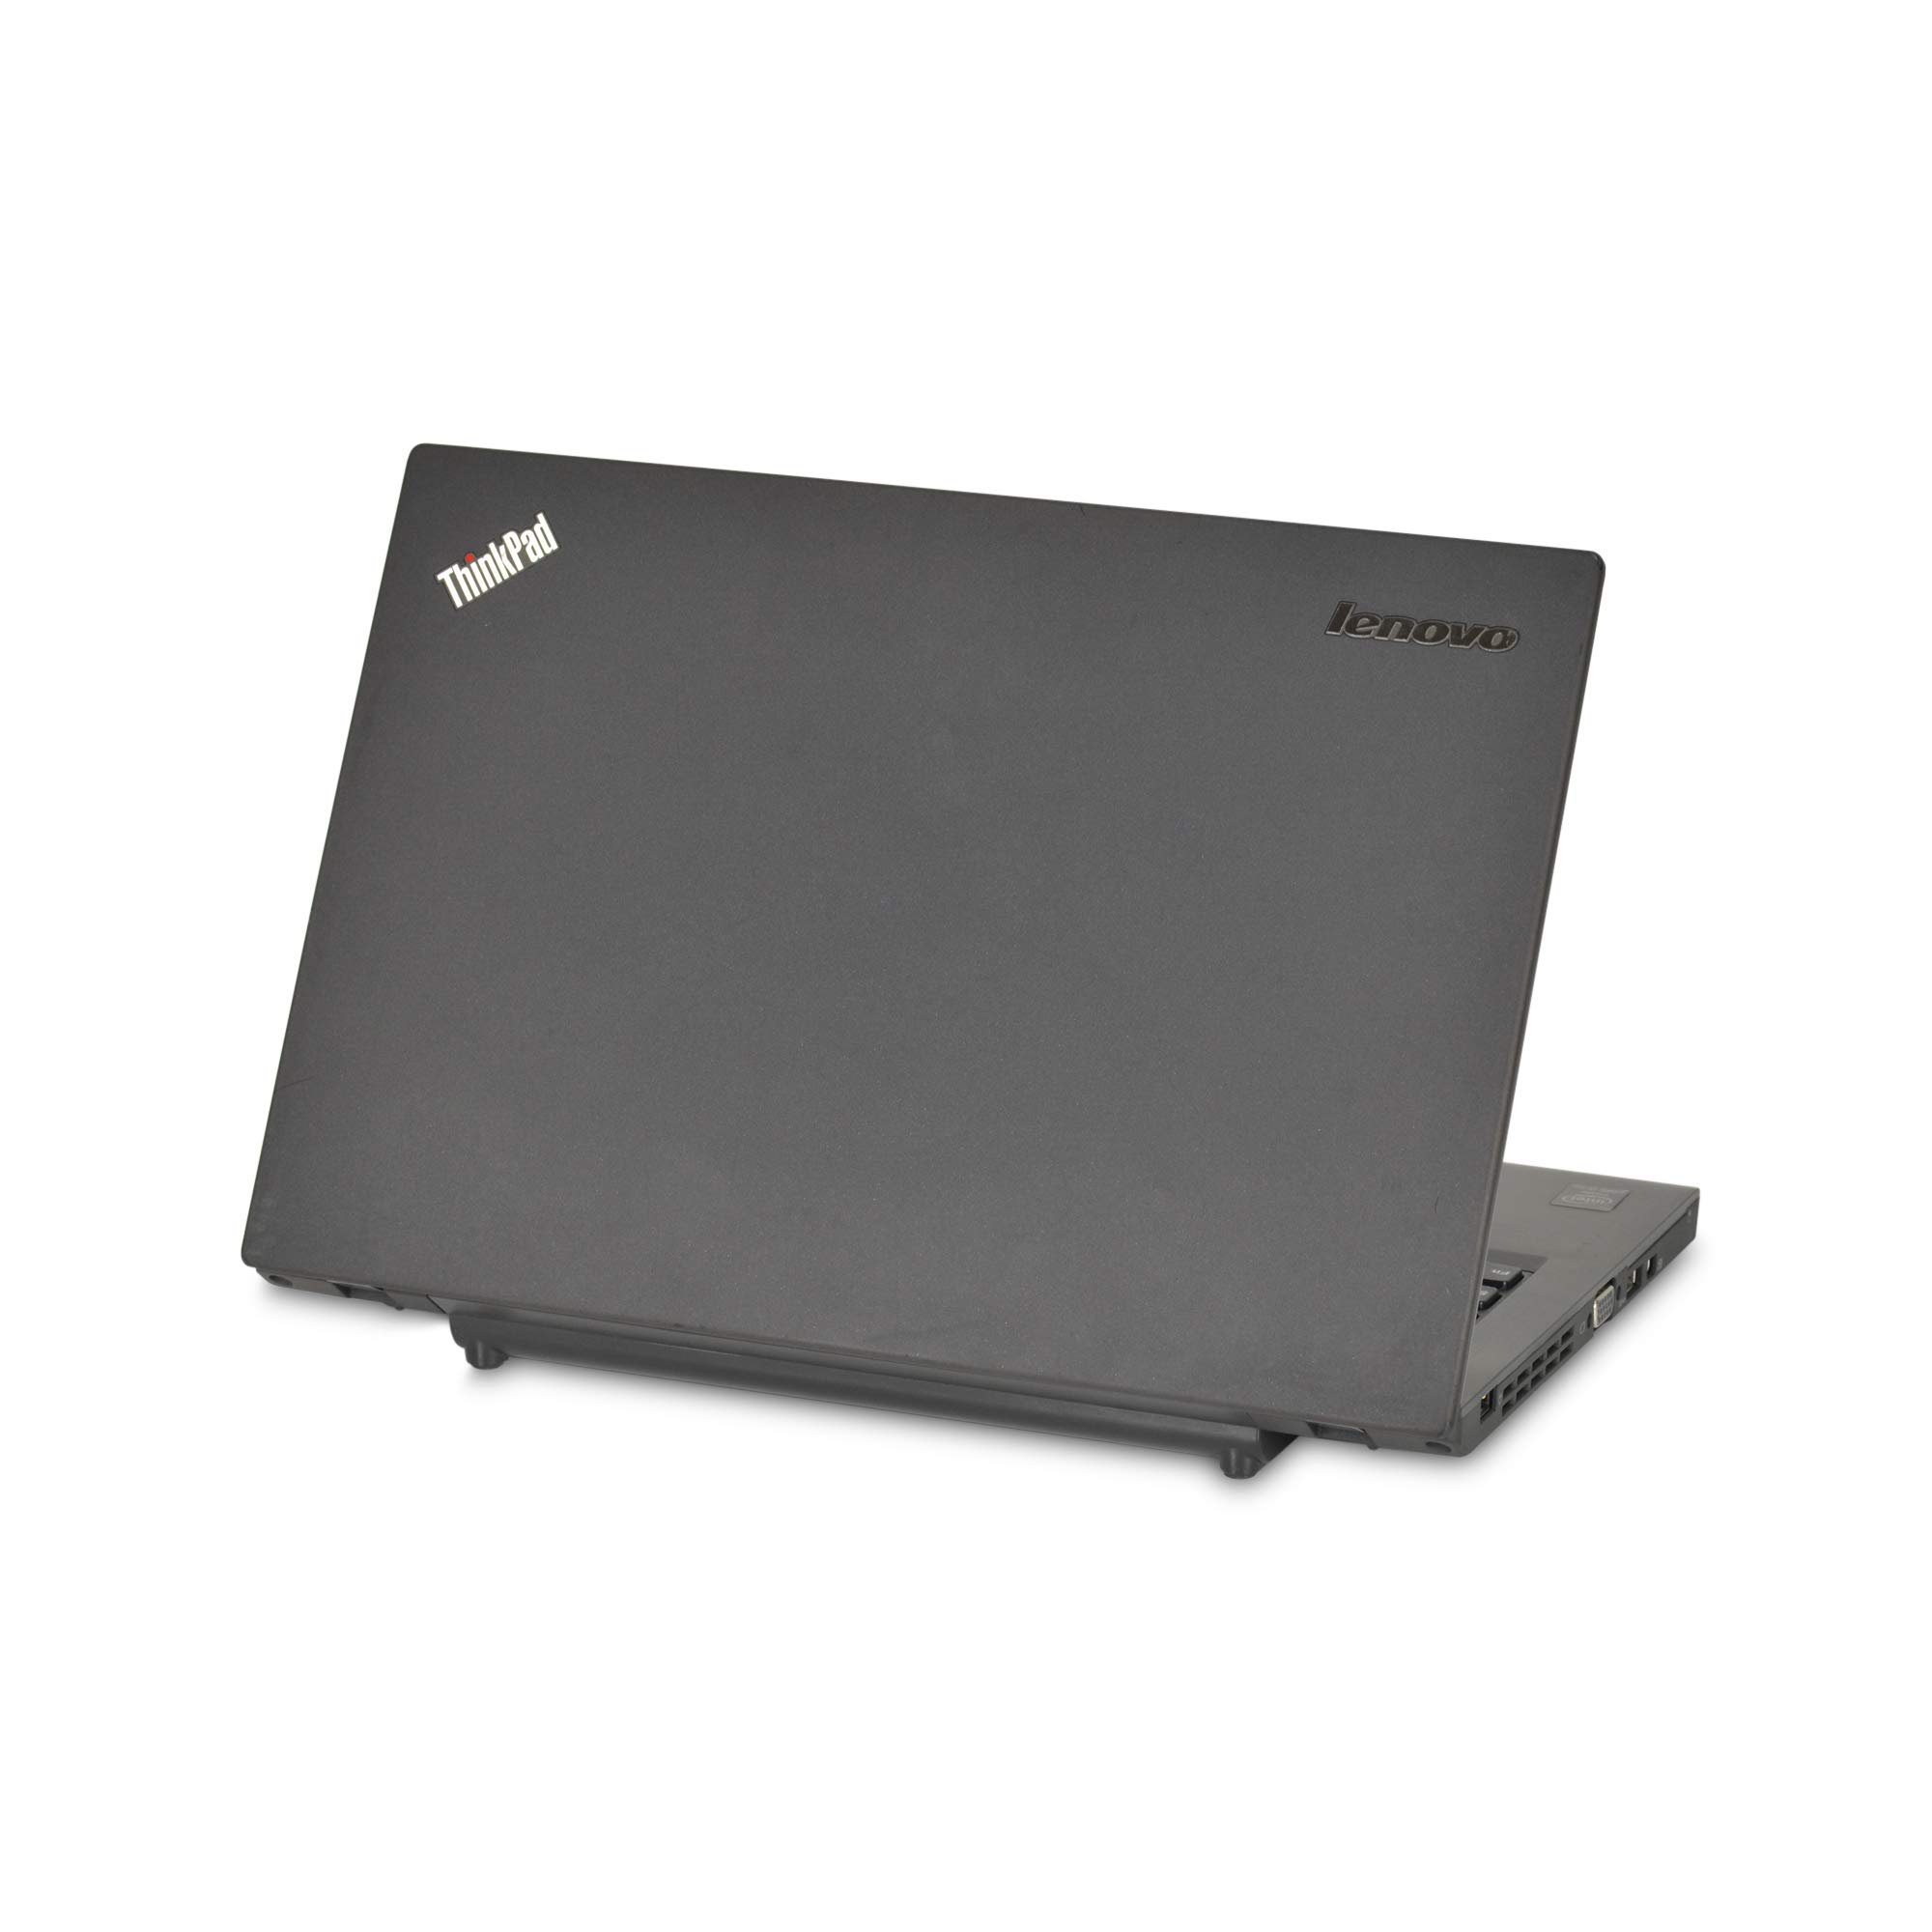 Lenovo ThinkPad X240 12.5 inches Laptop, Core i5-4200U 1.6GHz, 8GB RAM, 240GB Solid State Drive, Win10P64 (Renewed)